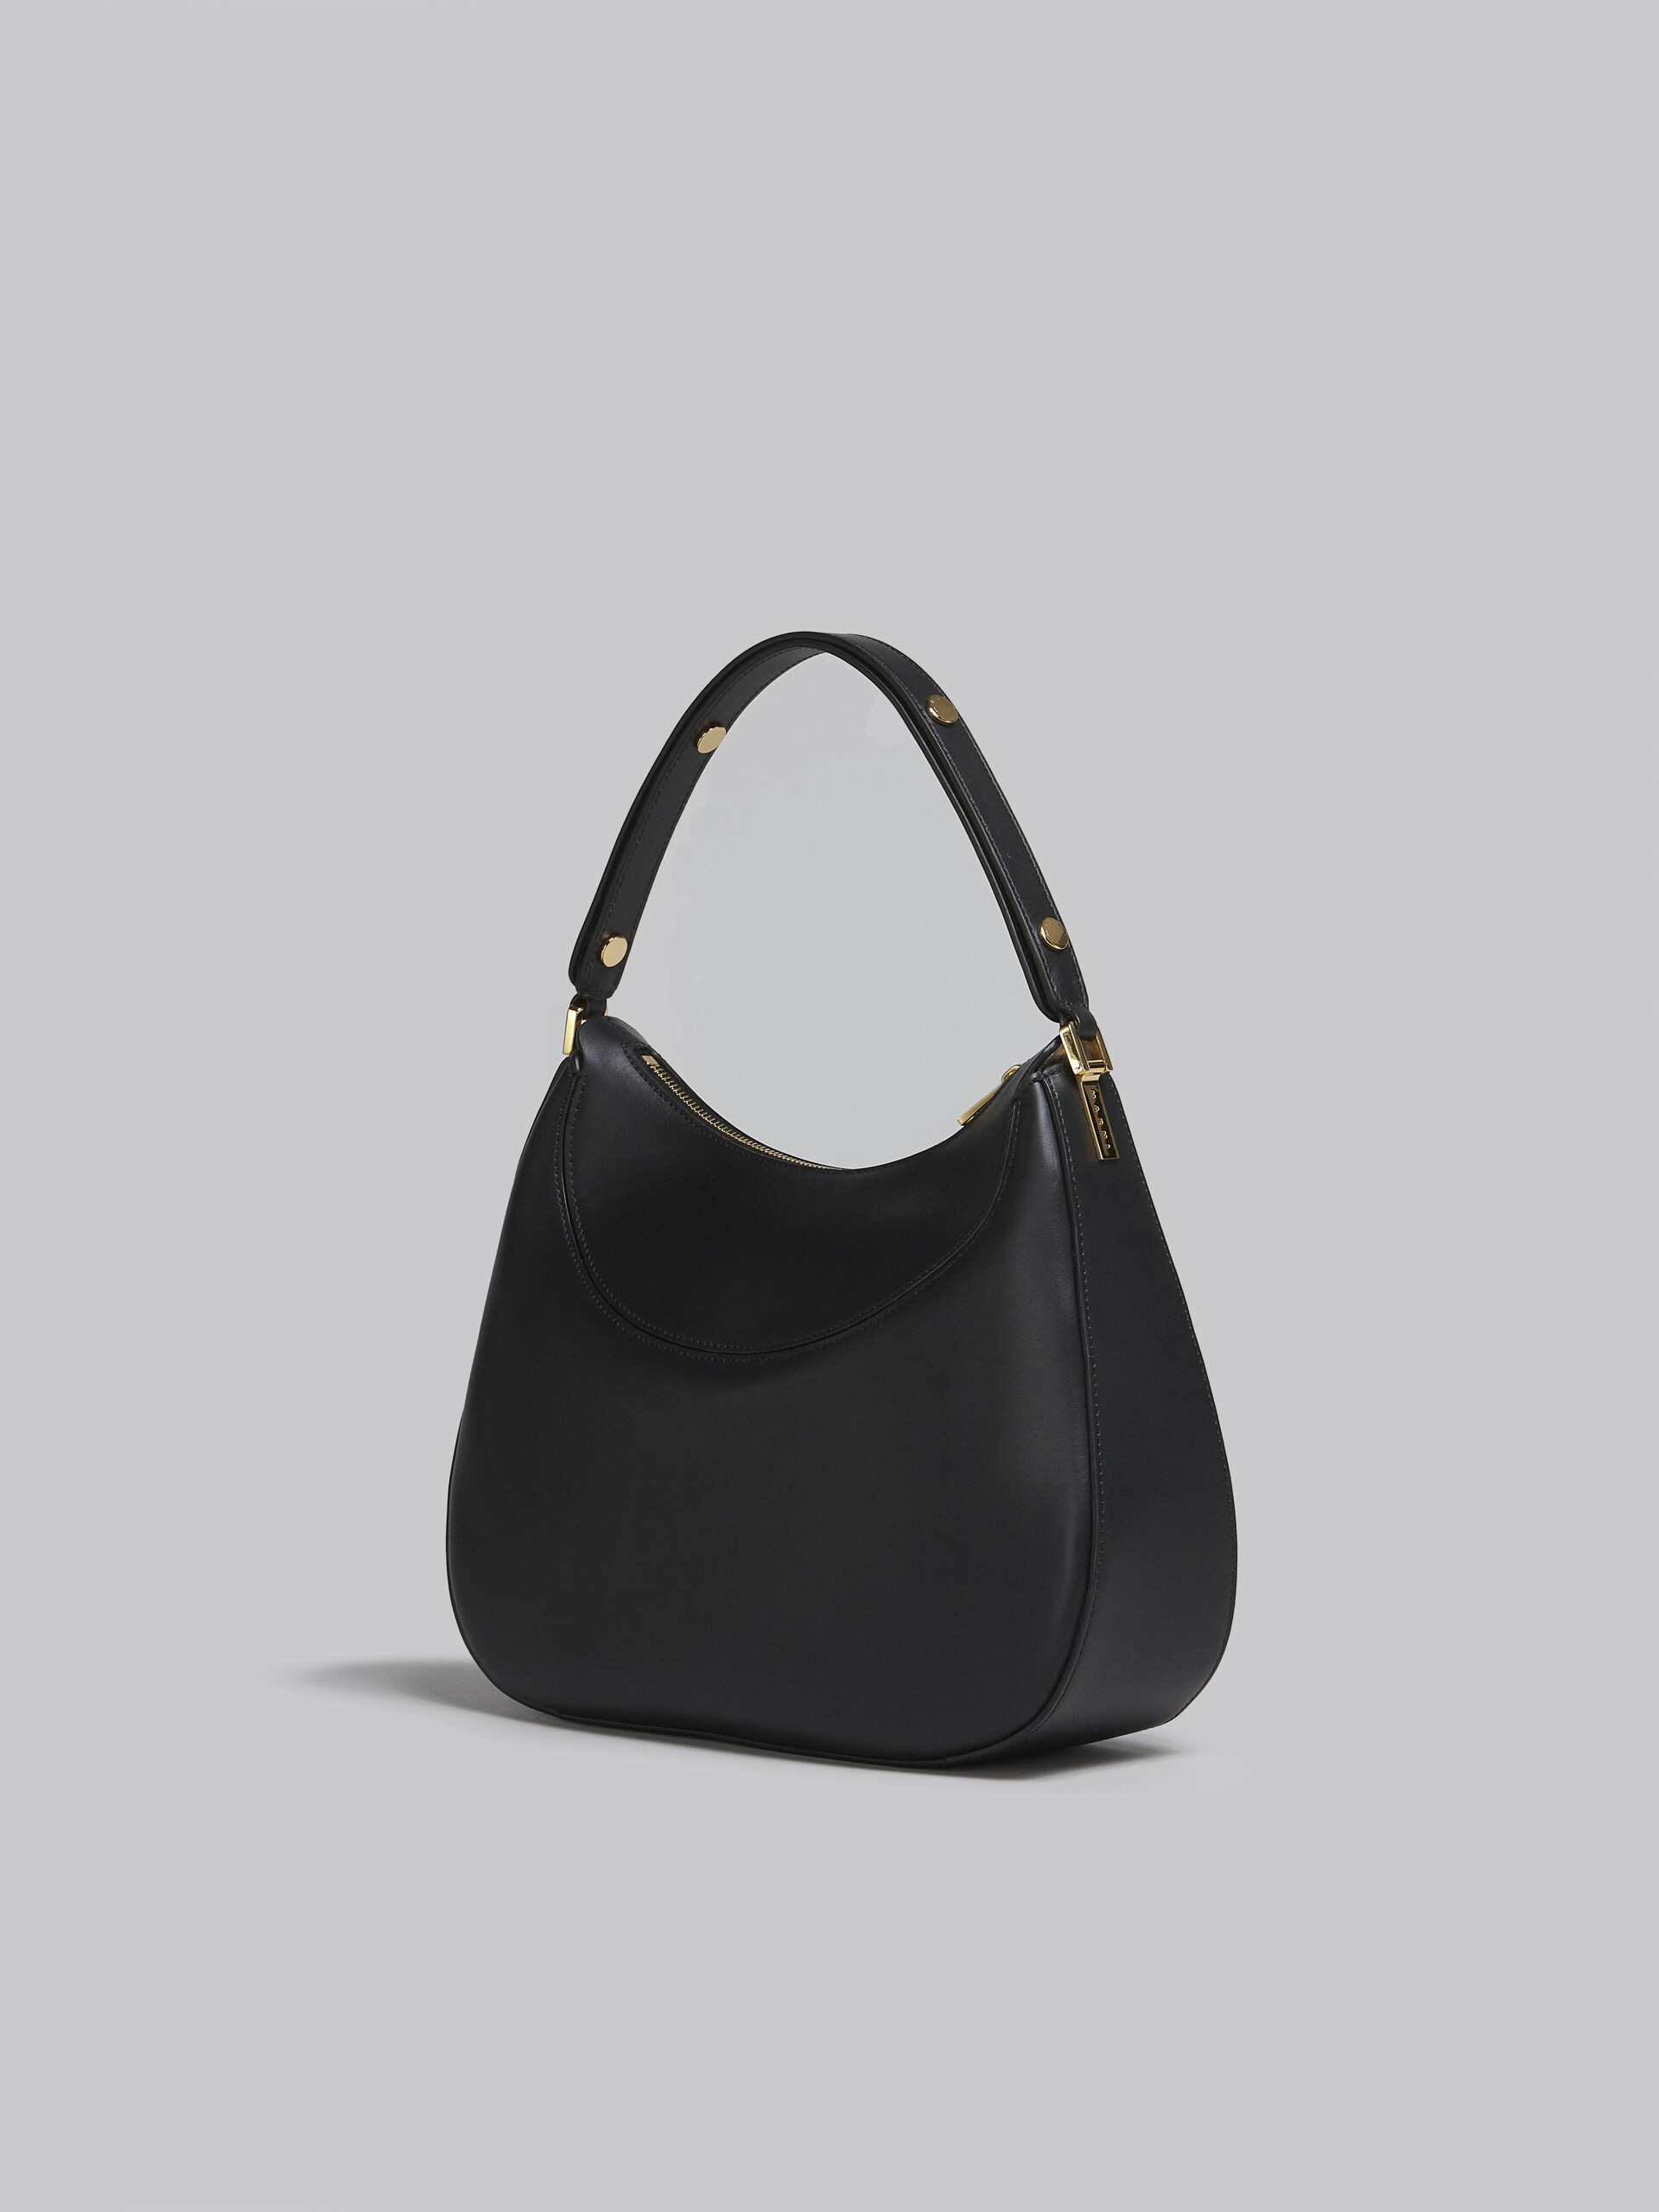 Milano large bag in black leather - Handbag - Image 3